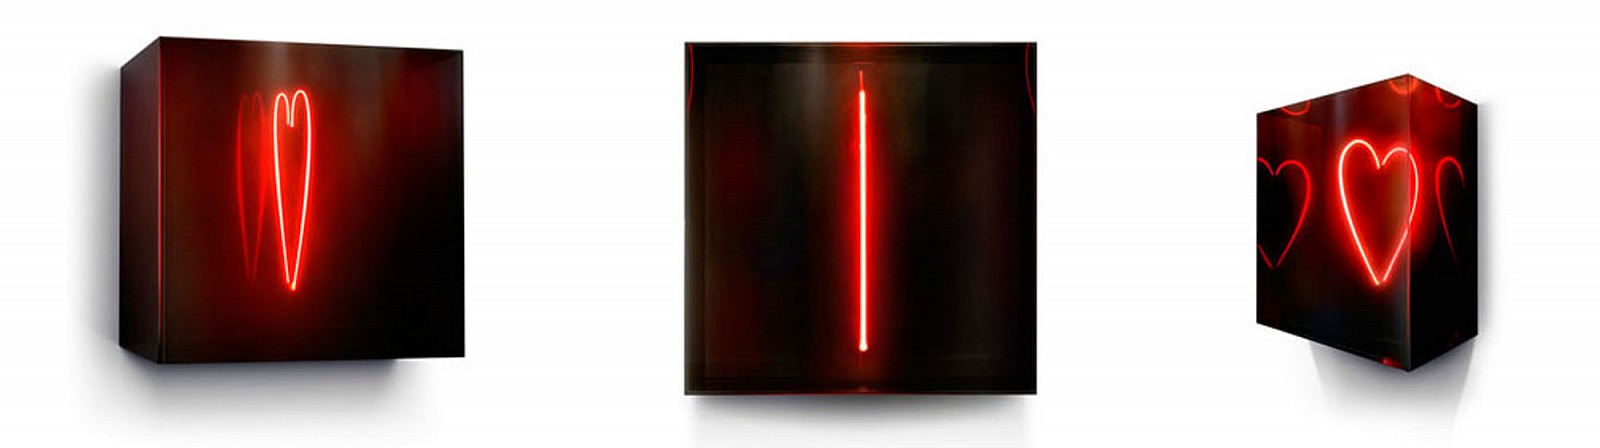 David Drebin, Mirrored Heart, 2013
Neon Light Installation, 24 x 24 x 13.75 inches